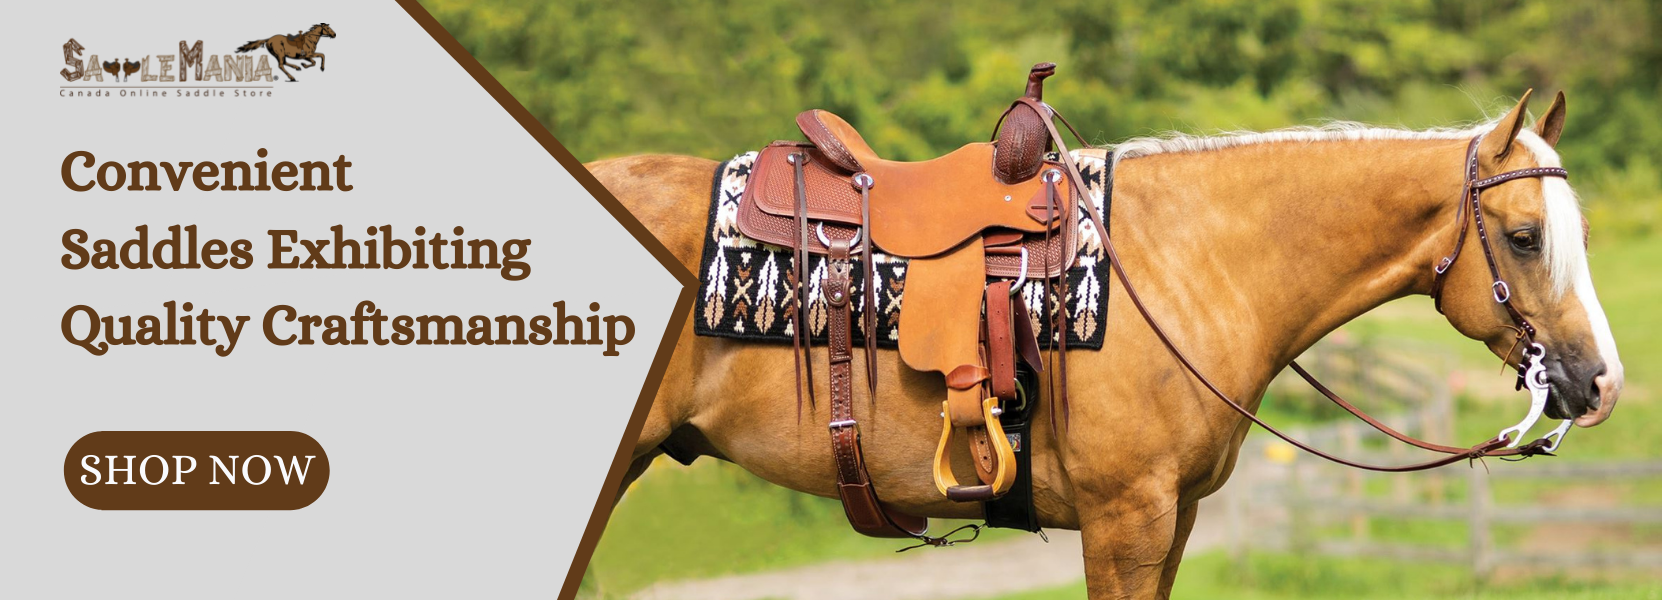 Saddles For Sale Ontario - Roping Saddle - Saddle Mania